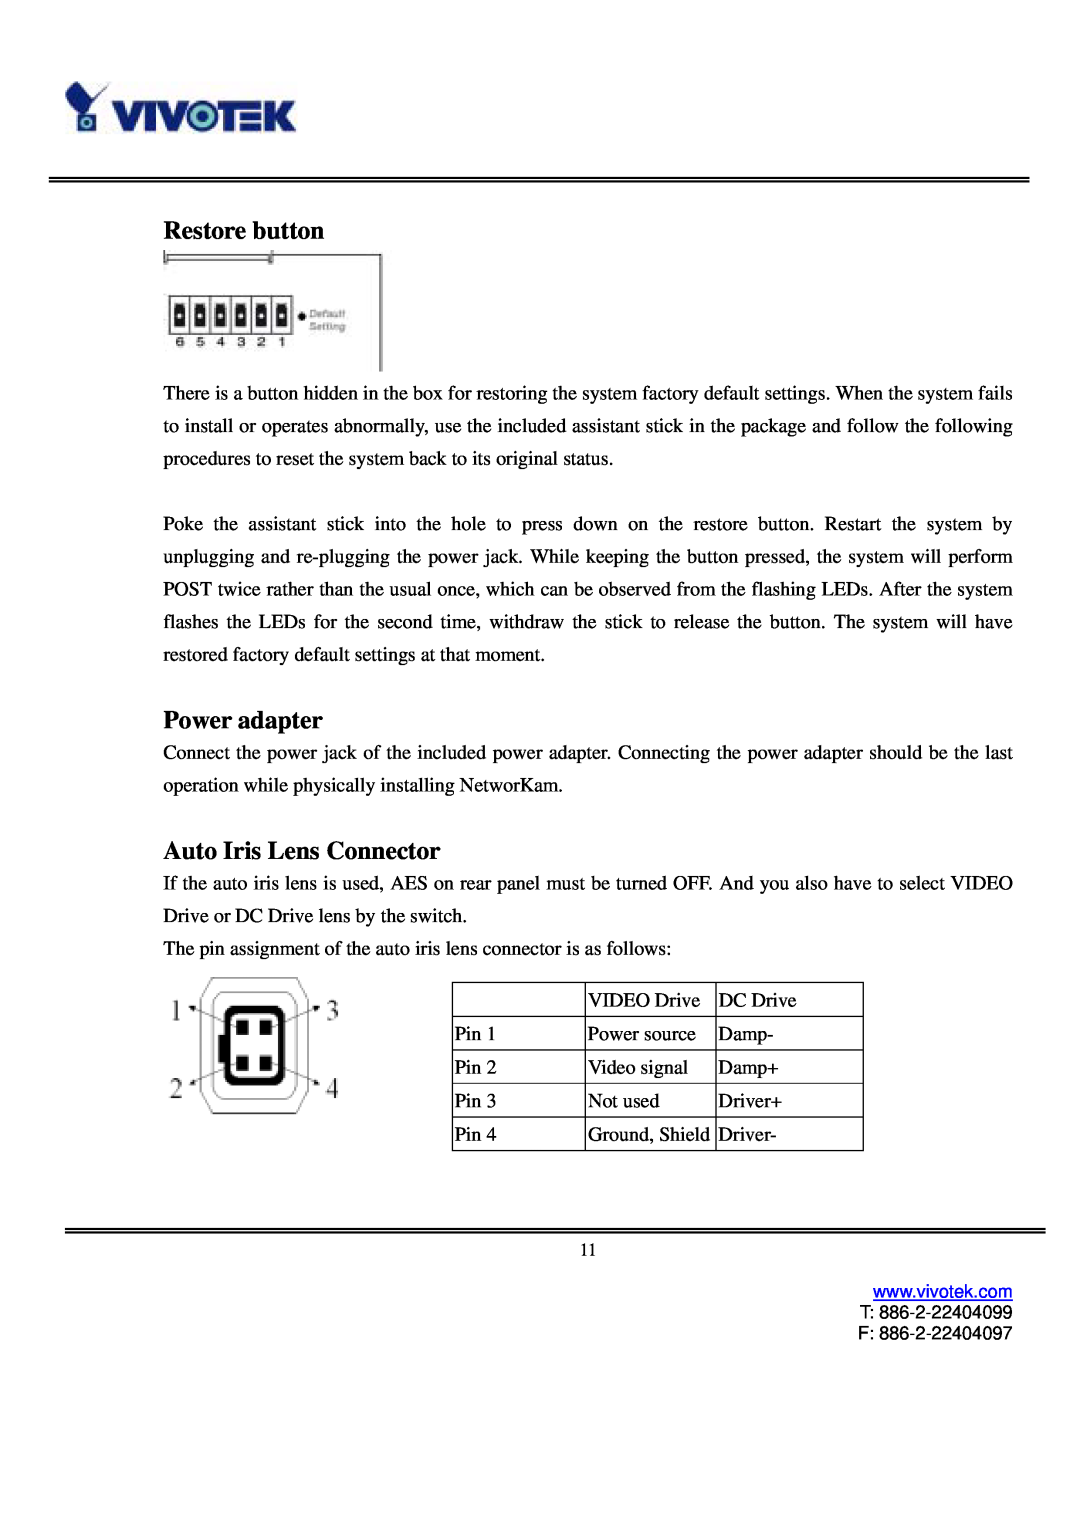 Vivotek IP3111/IP3121 user manual Restore button, Power adapter, Auto Iris Lens Connector 